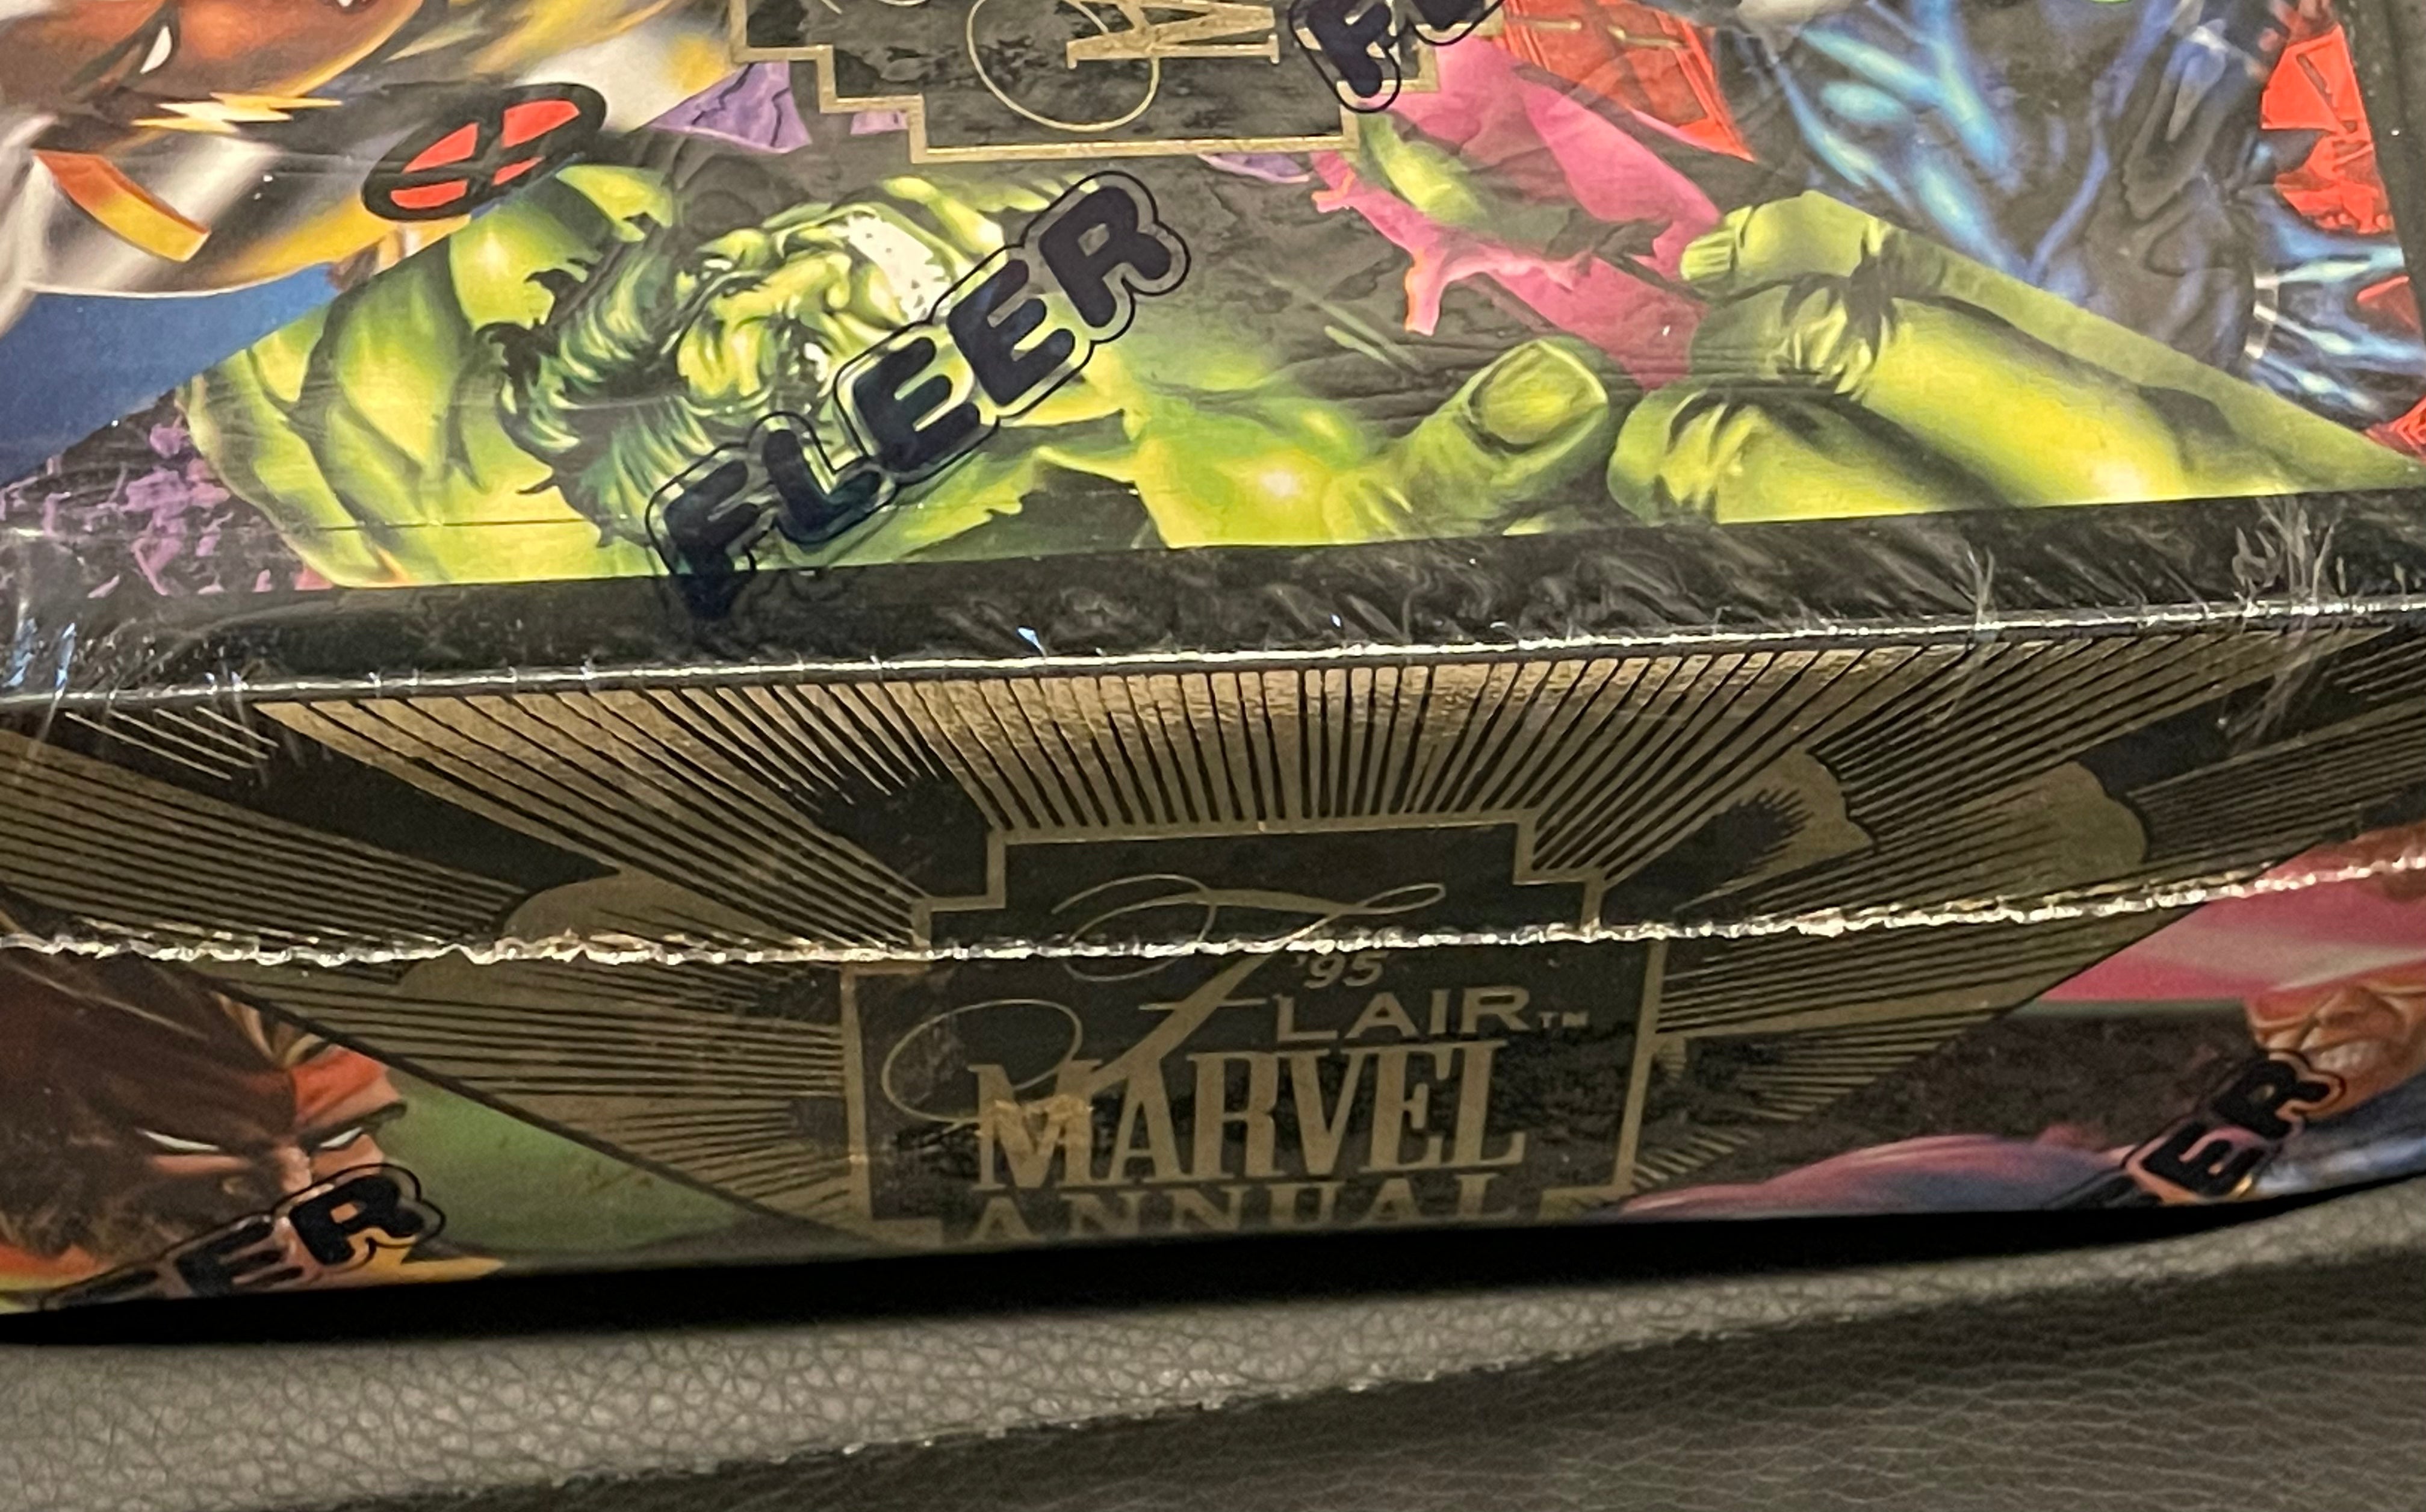 Flair Marvel Annual rare factory sealed box 1995